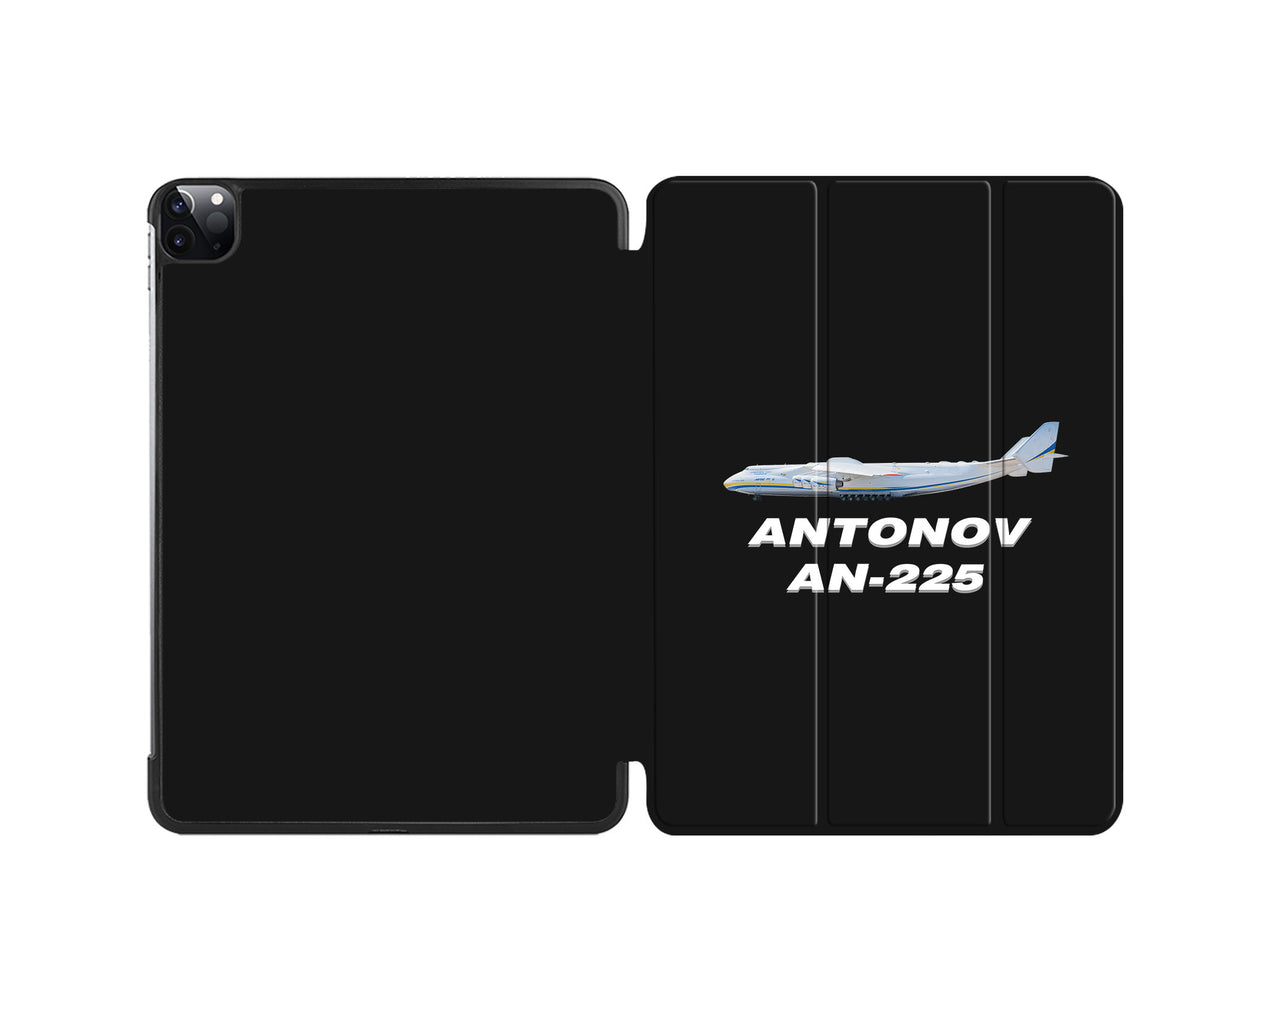 The Antonov AN-225 Designed iPad Cases